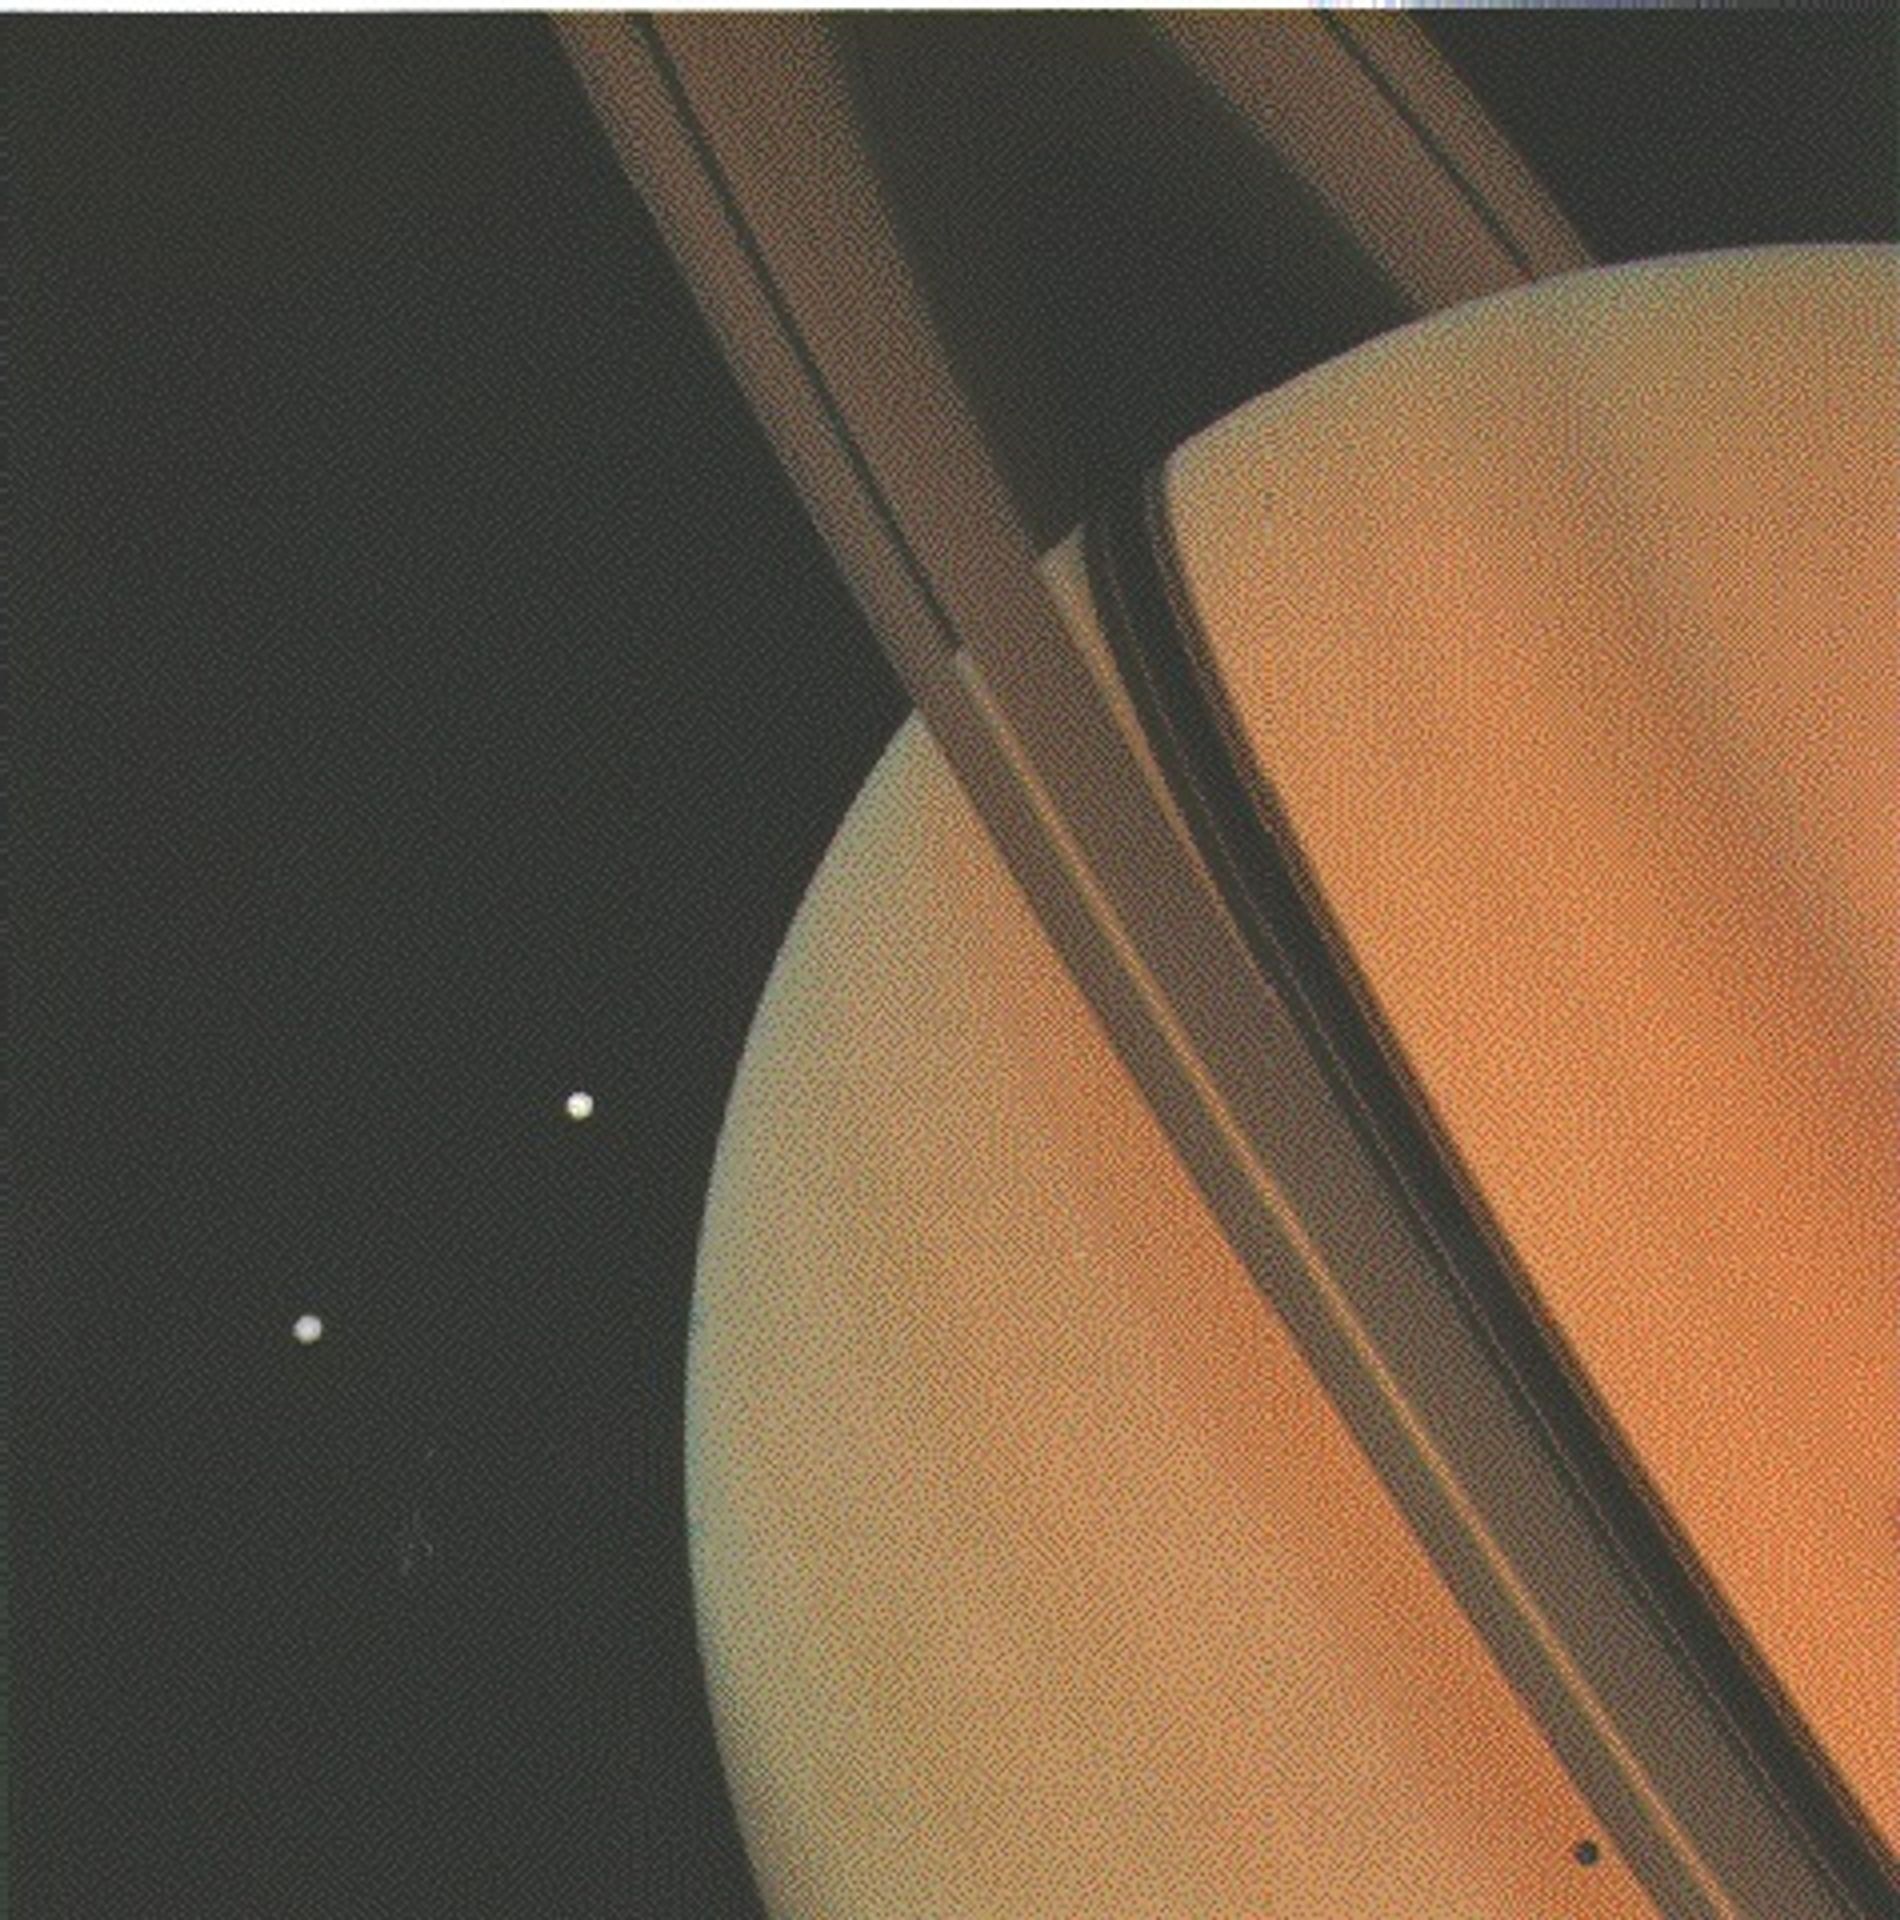 Saturn - 1 - GALERIE: Co nafotila sonda Voyager 1 - SATURN (6/6)